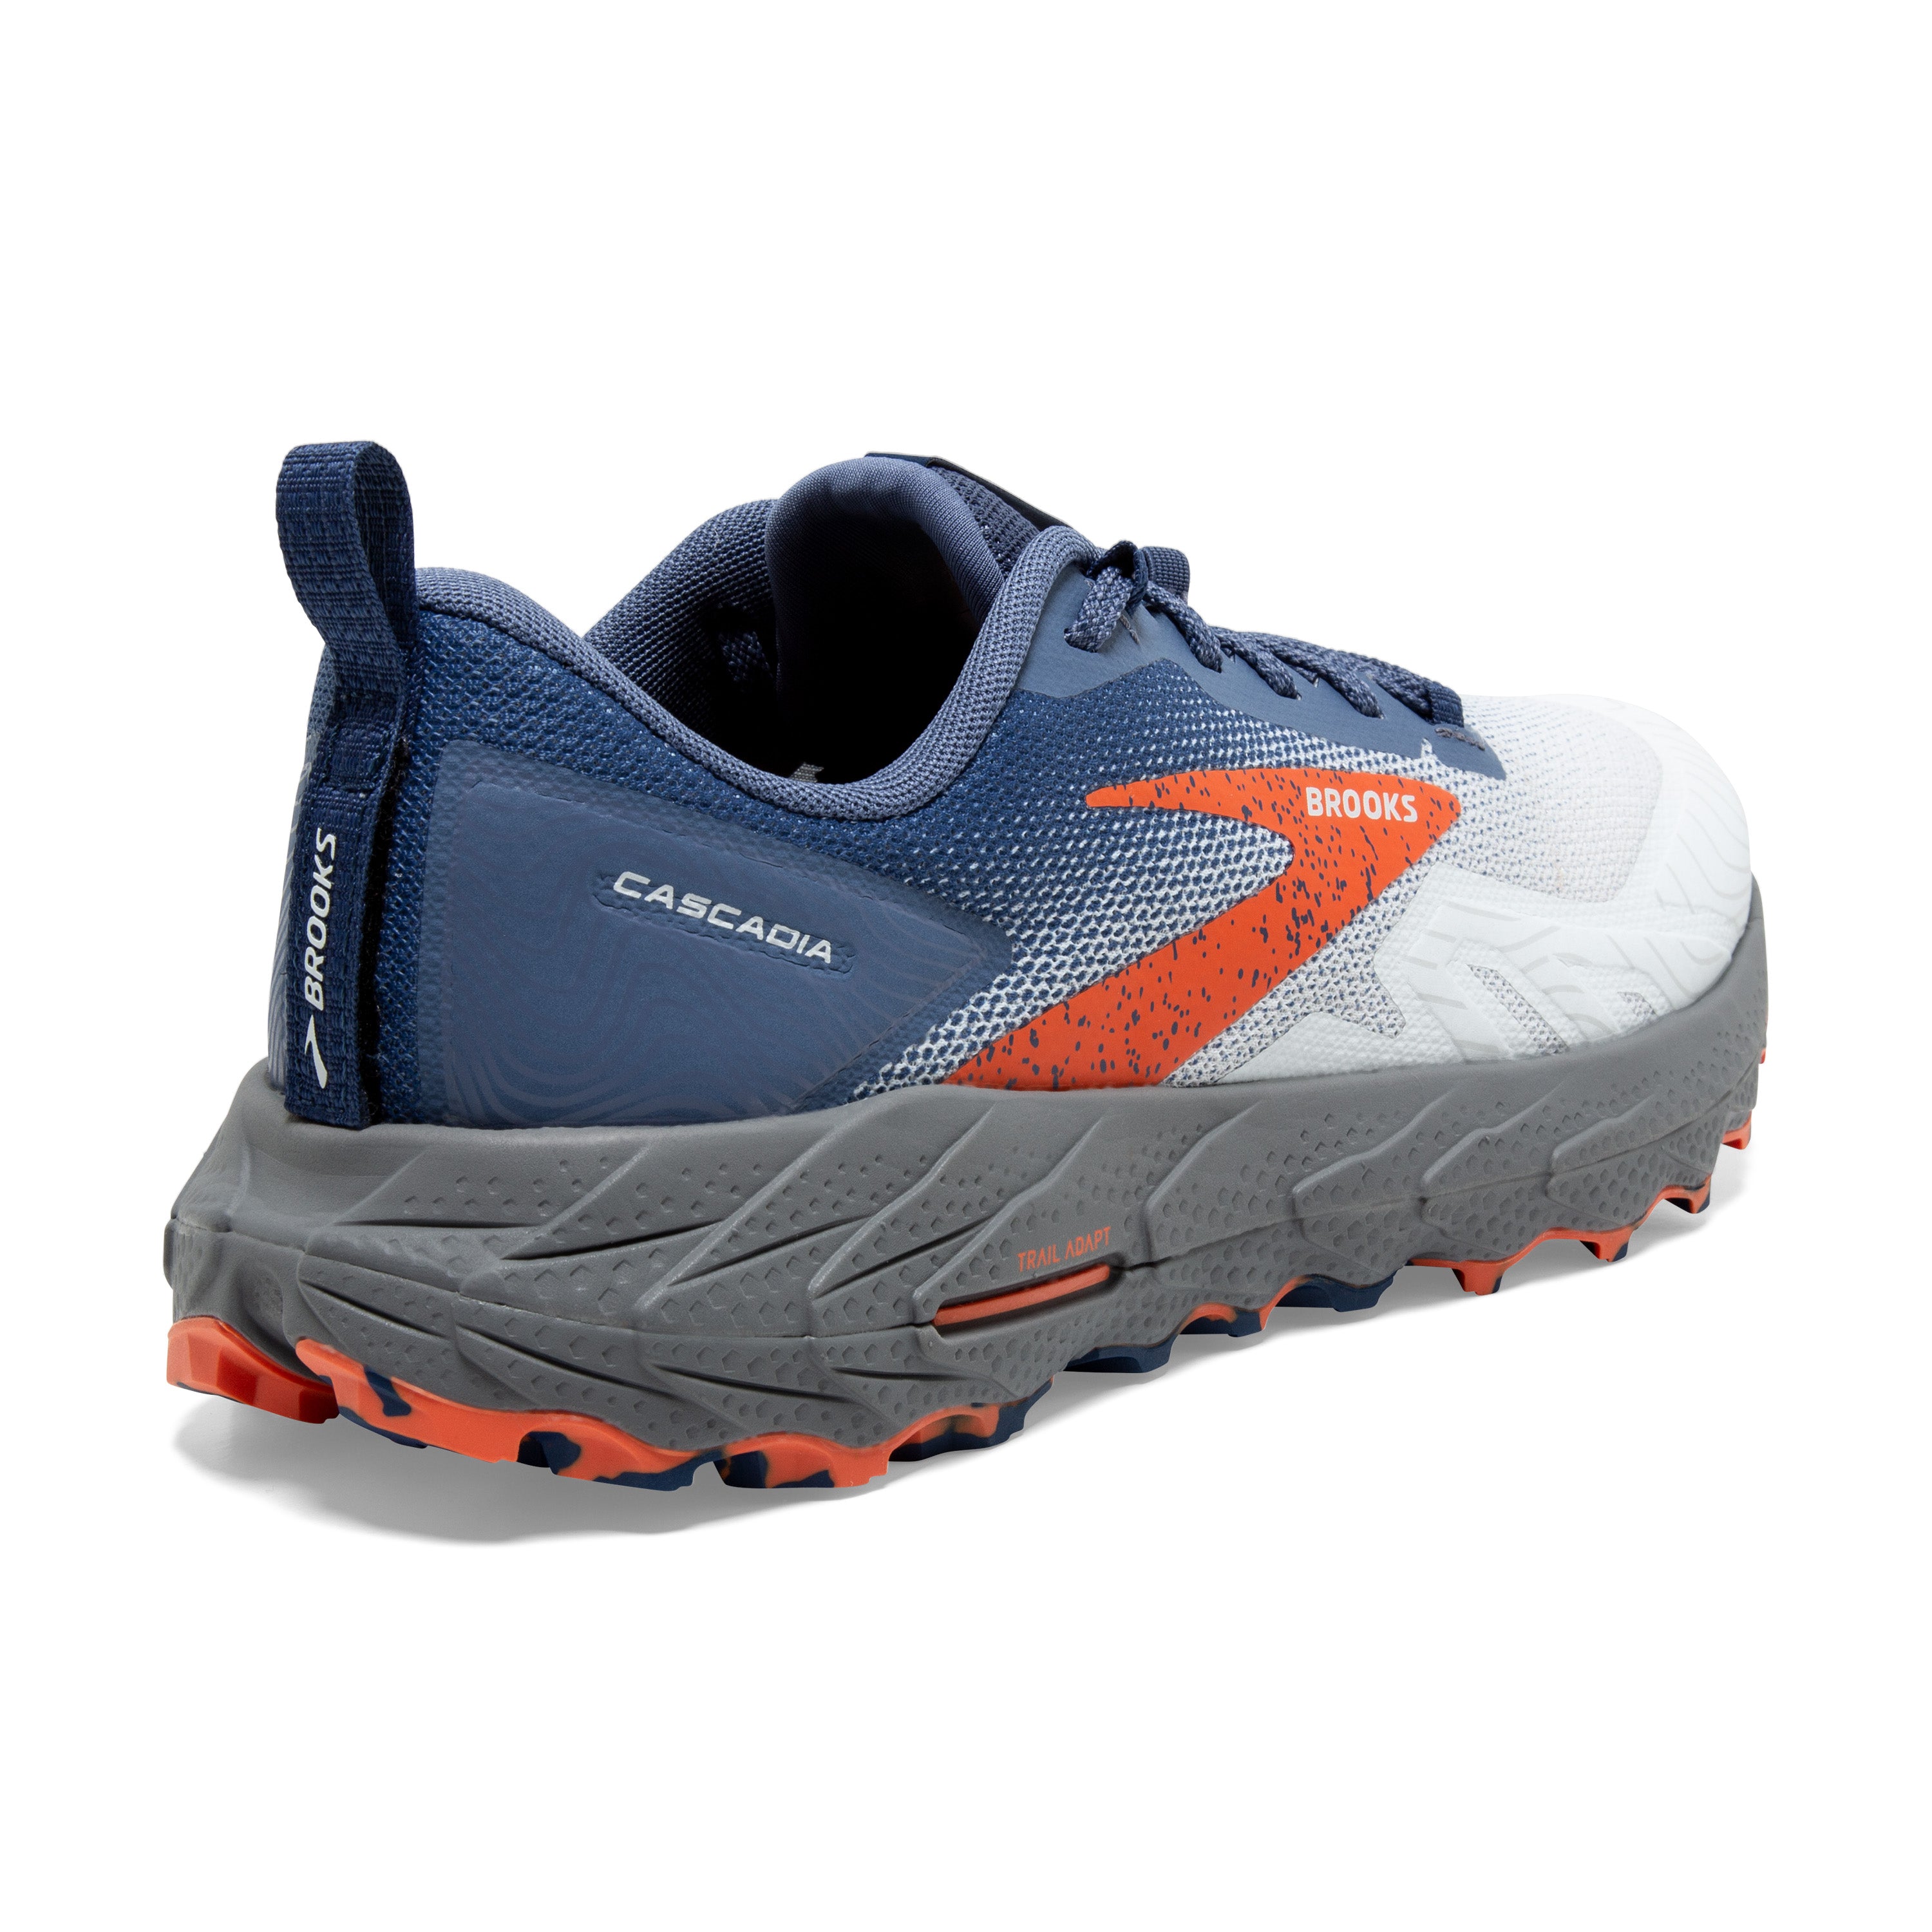 Cascadia 17 - Men's Trail Running Shoes